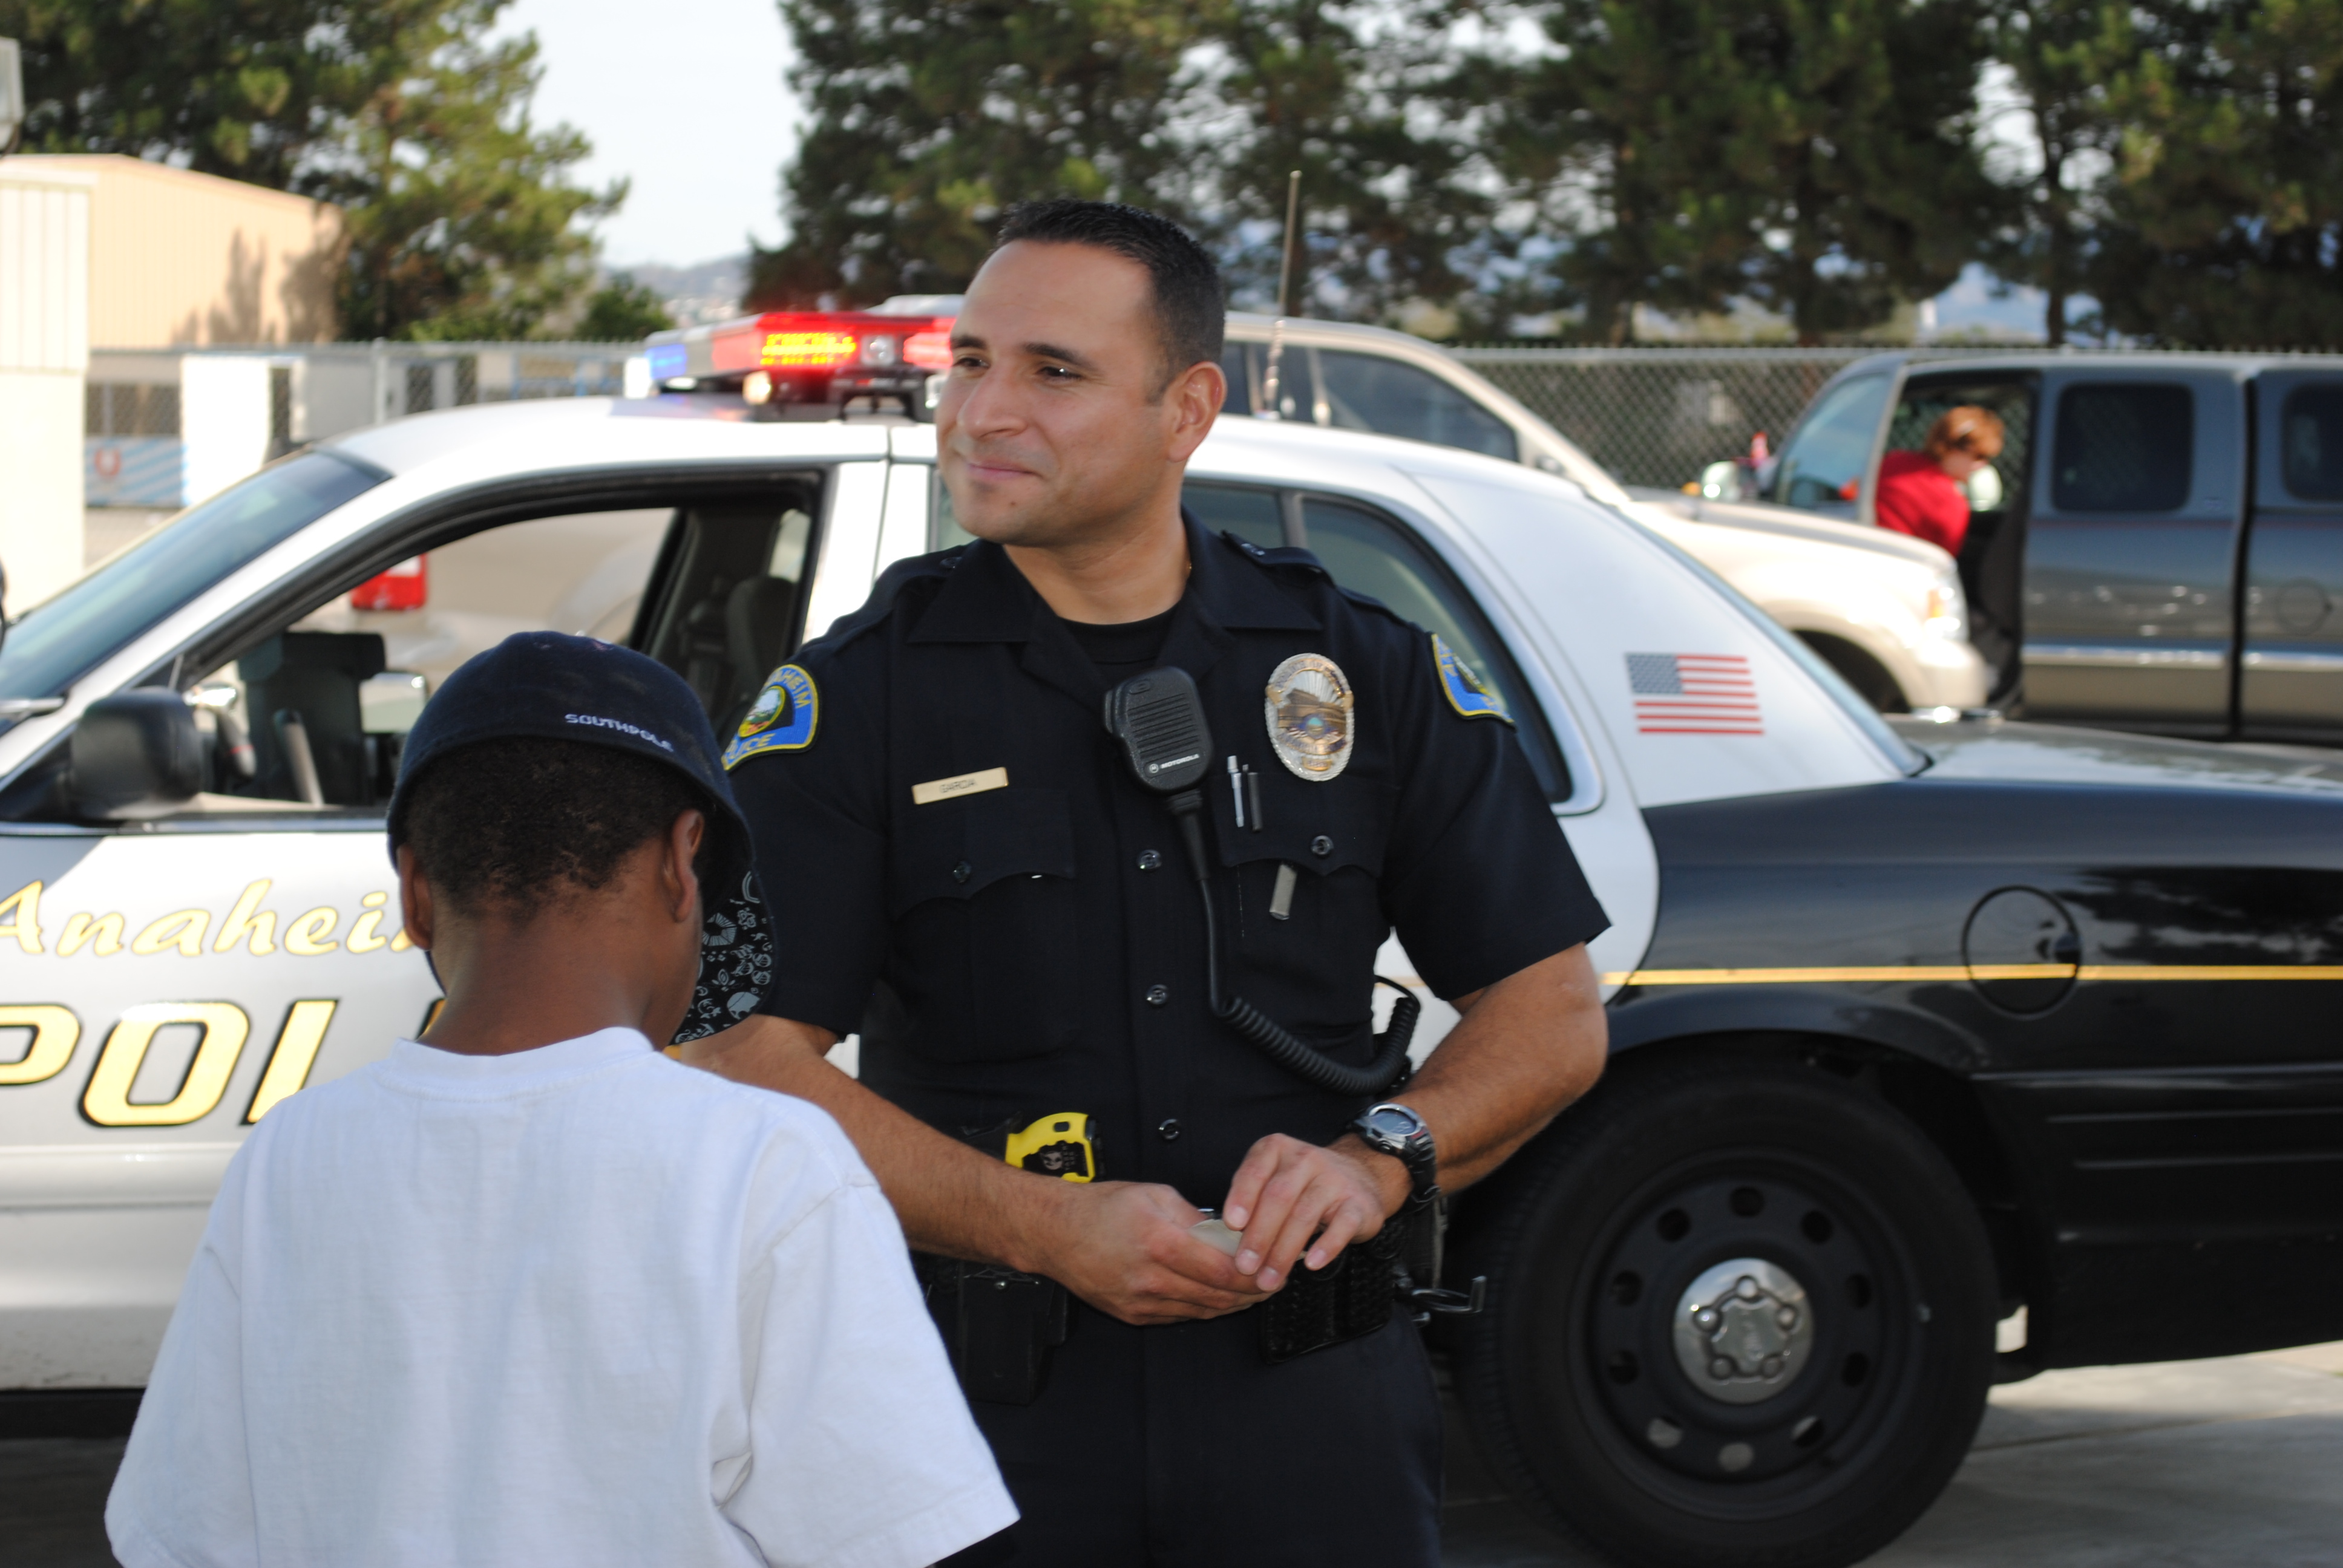 Cop rescuing a child - representative image